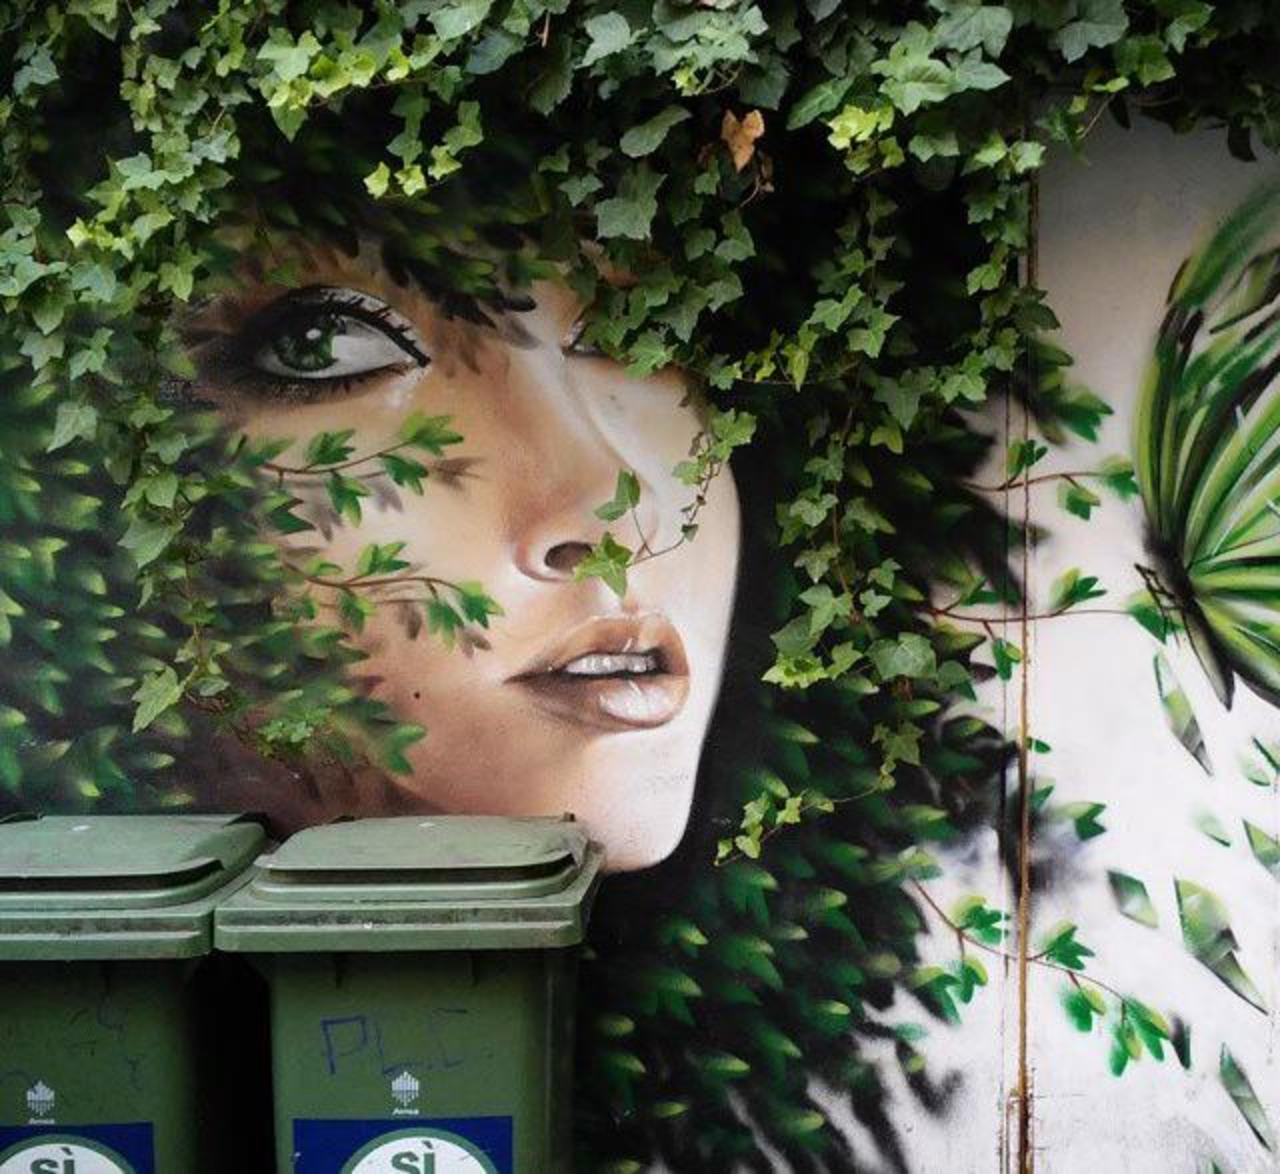 When Street Art meets nature by Dasxa in Isola, Millan 

#art #arte #graffiti #streetart http://t.co/oaTSxHjb9E